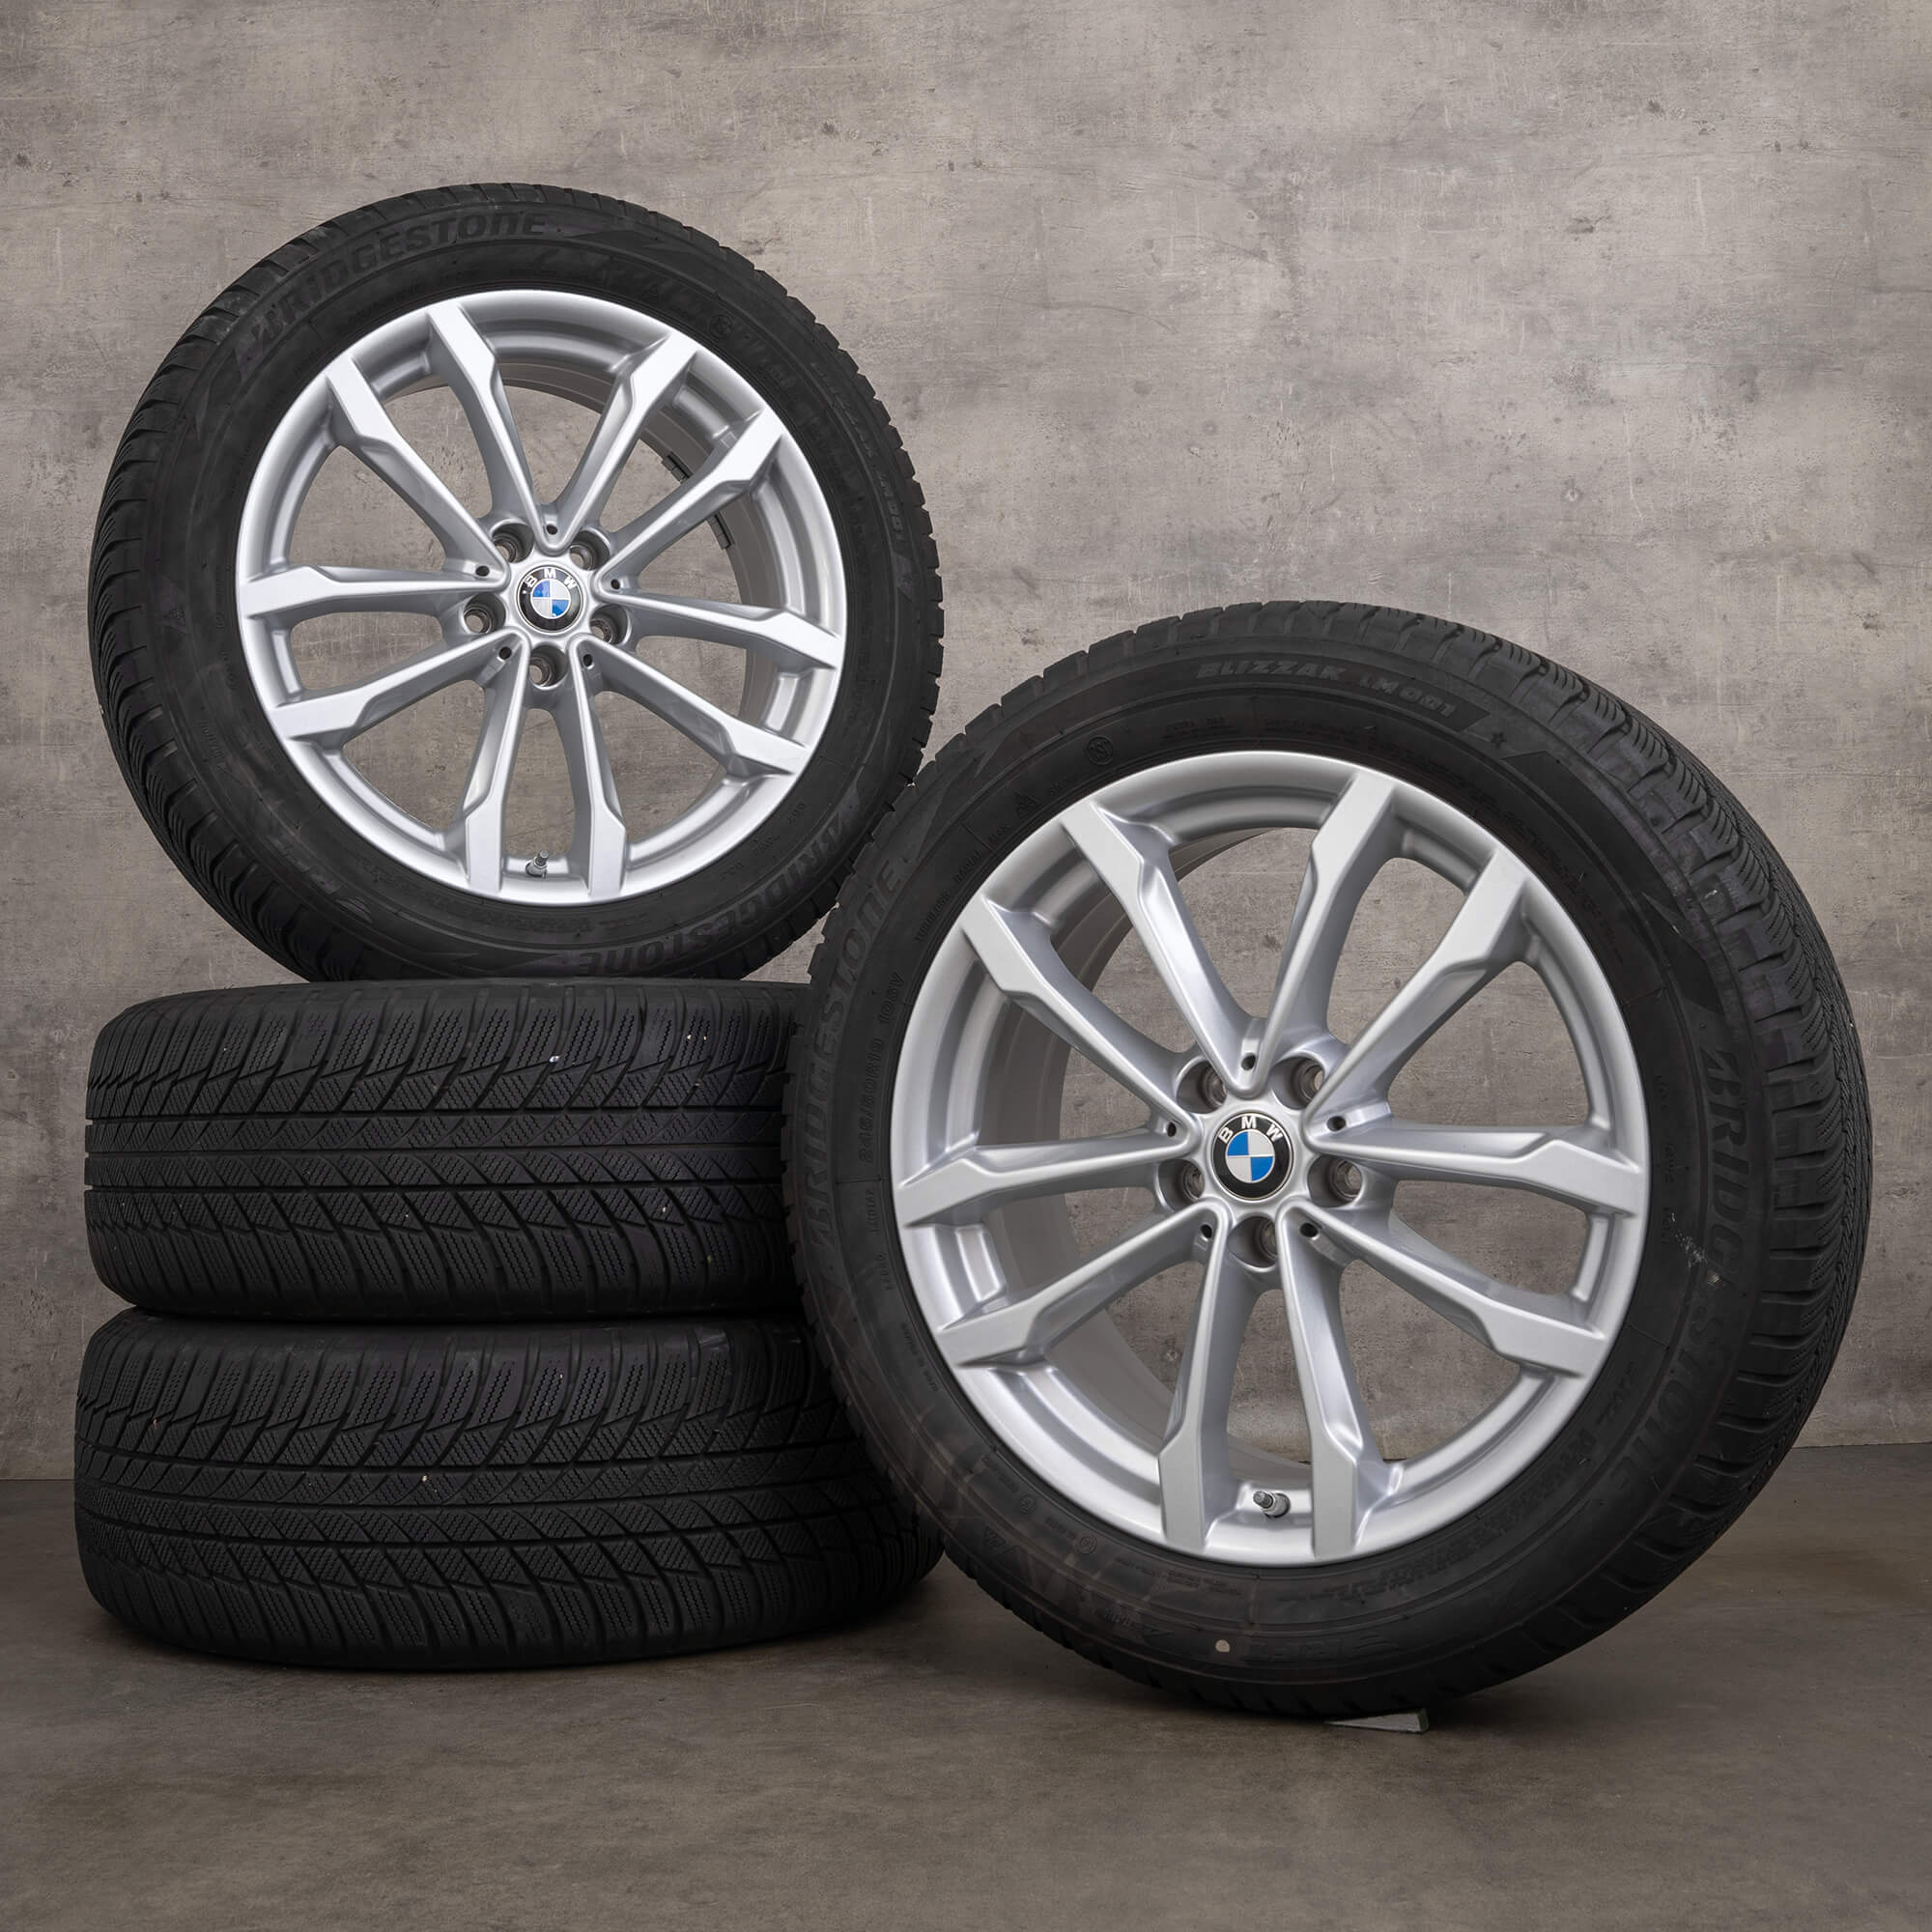 Original BMW X3 G01 X4 G02 19 inch rims winter tires 6877325 691 silver